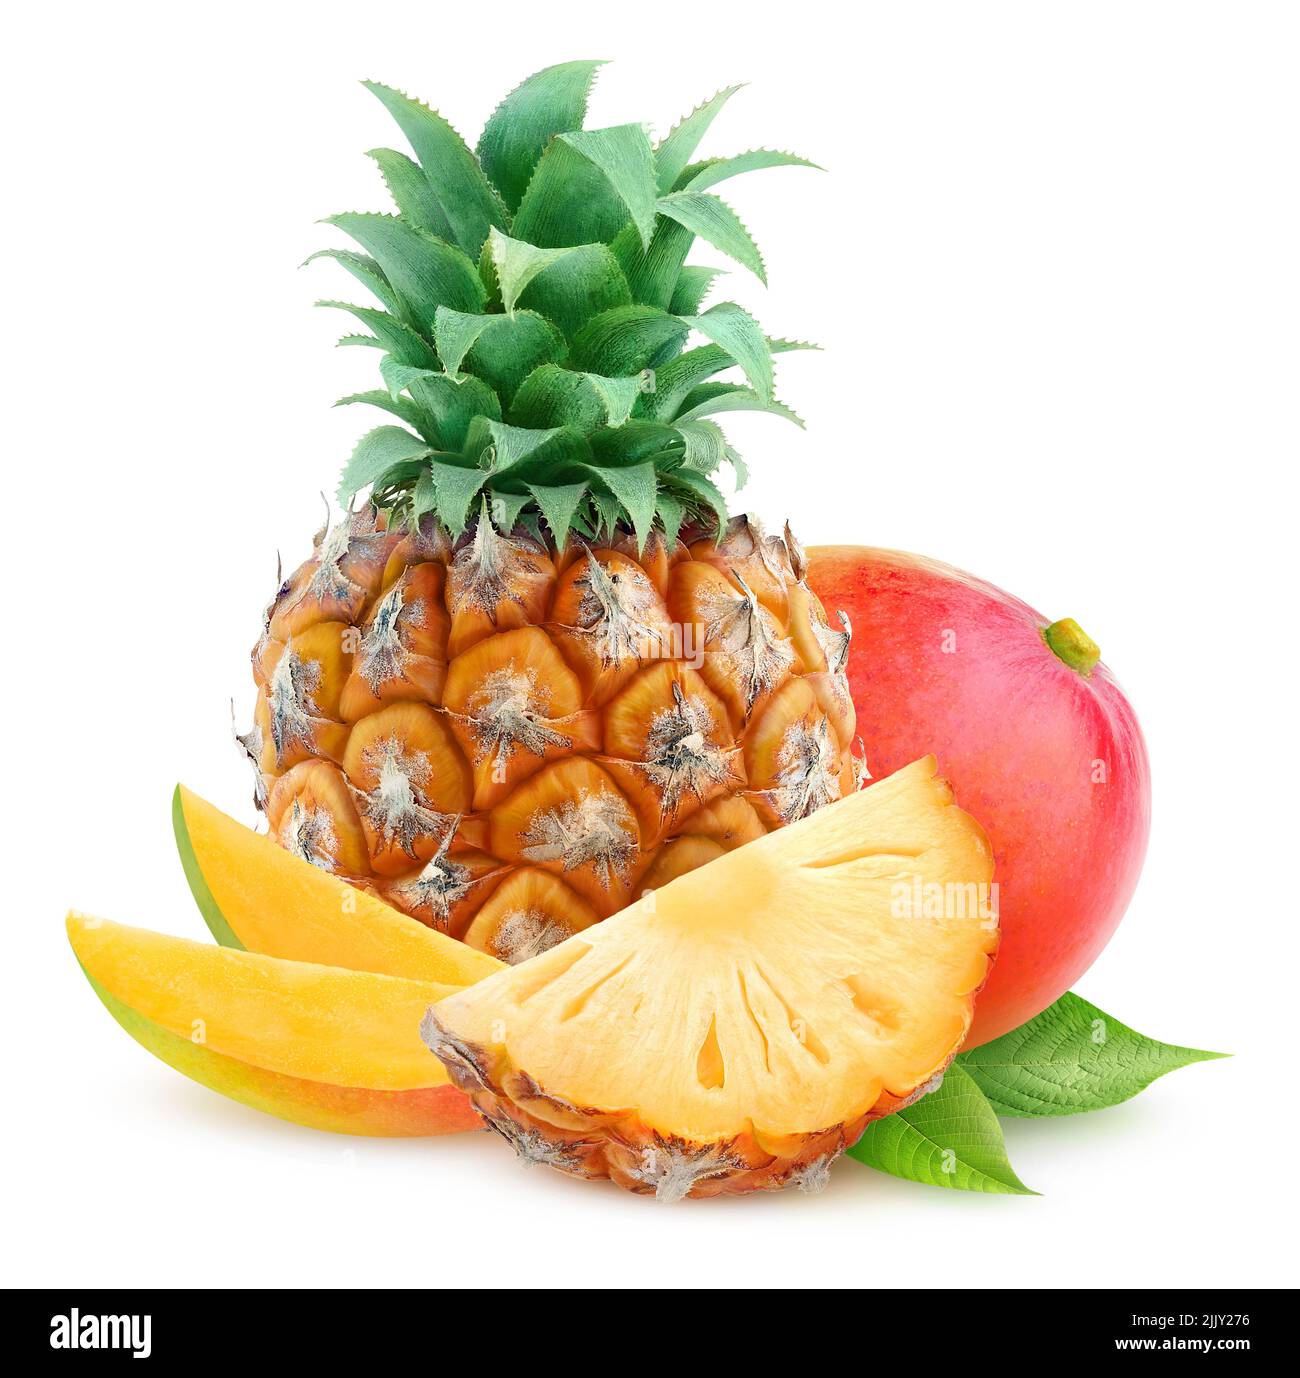 Cut pineapple and mango fruits isolated on white background Stock Photo